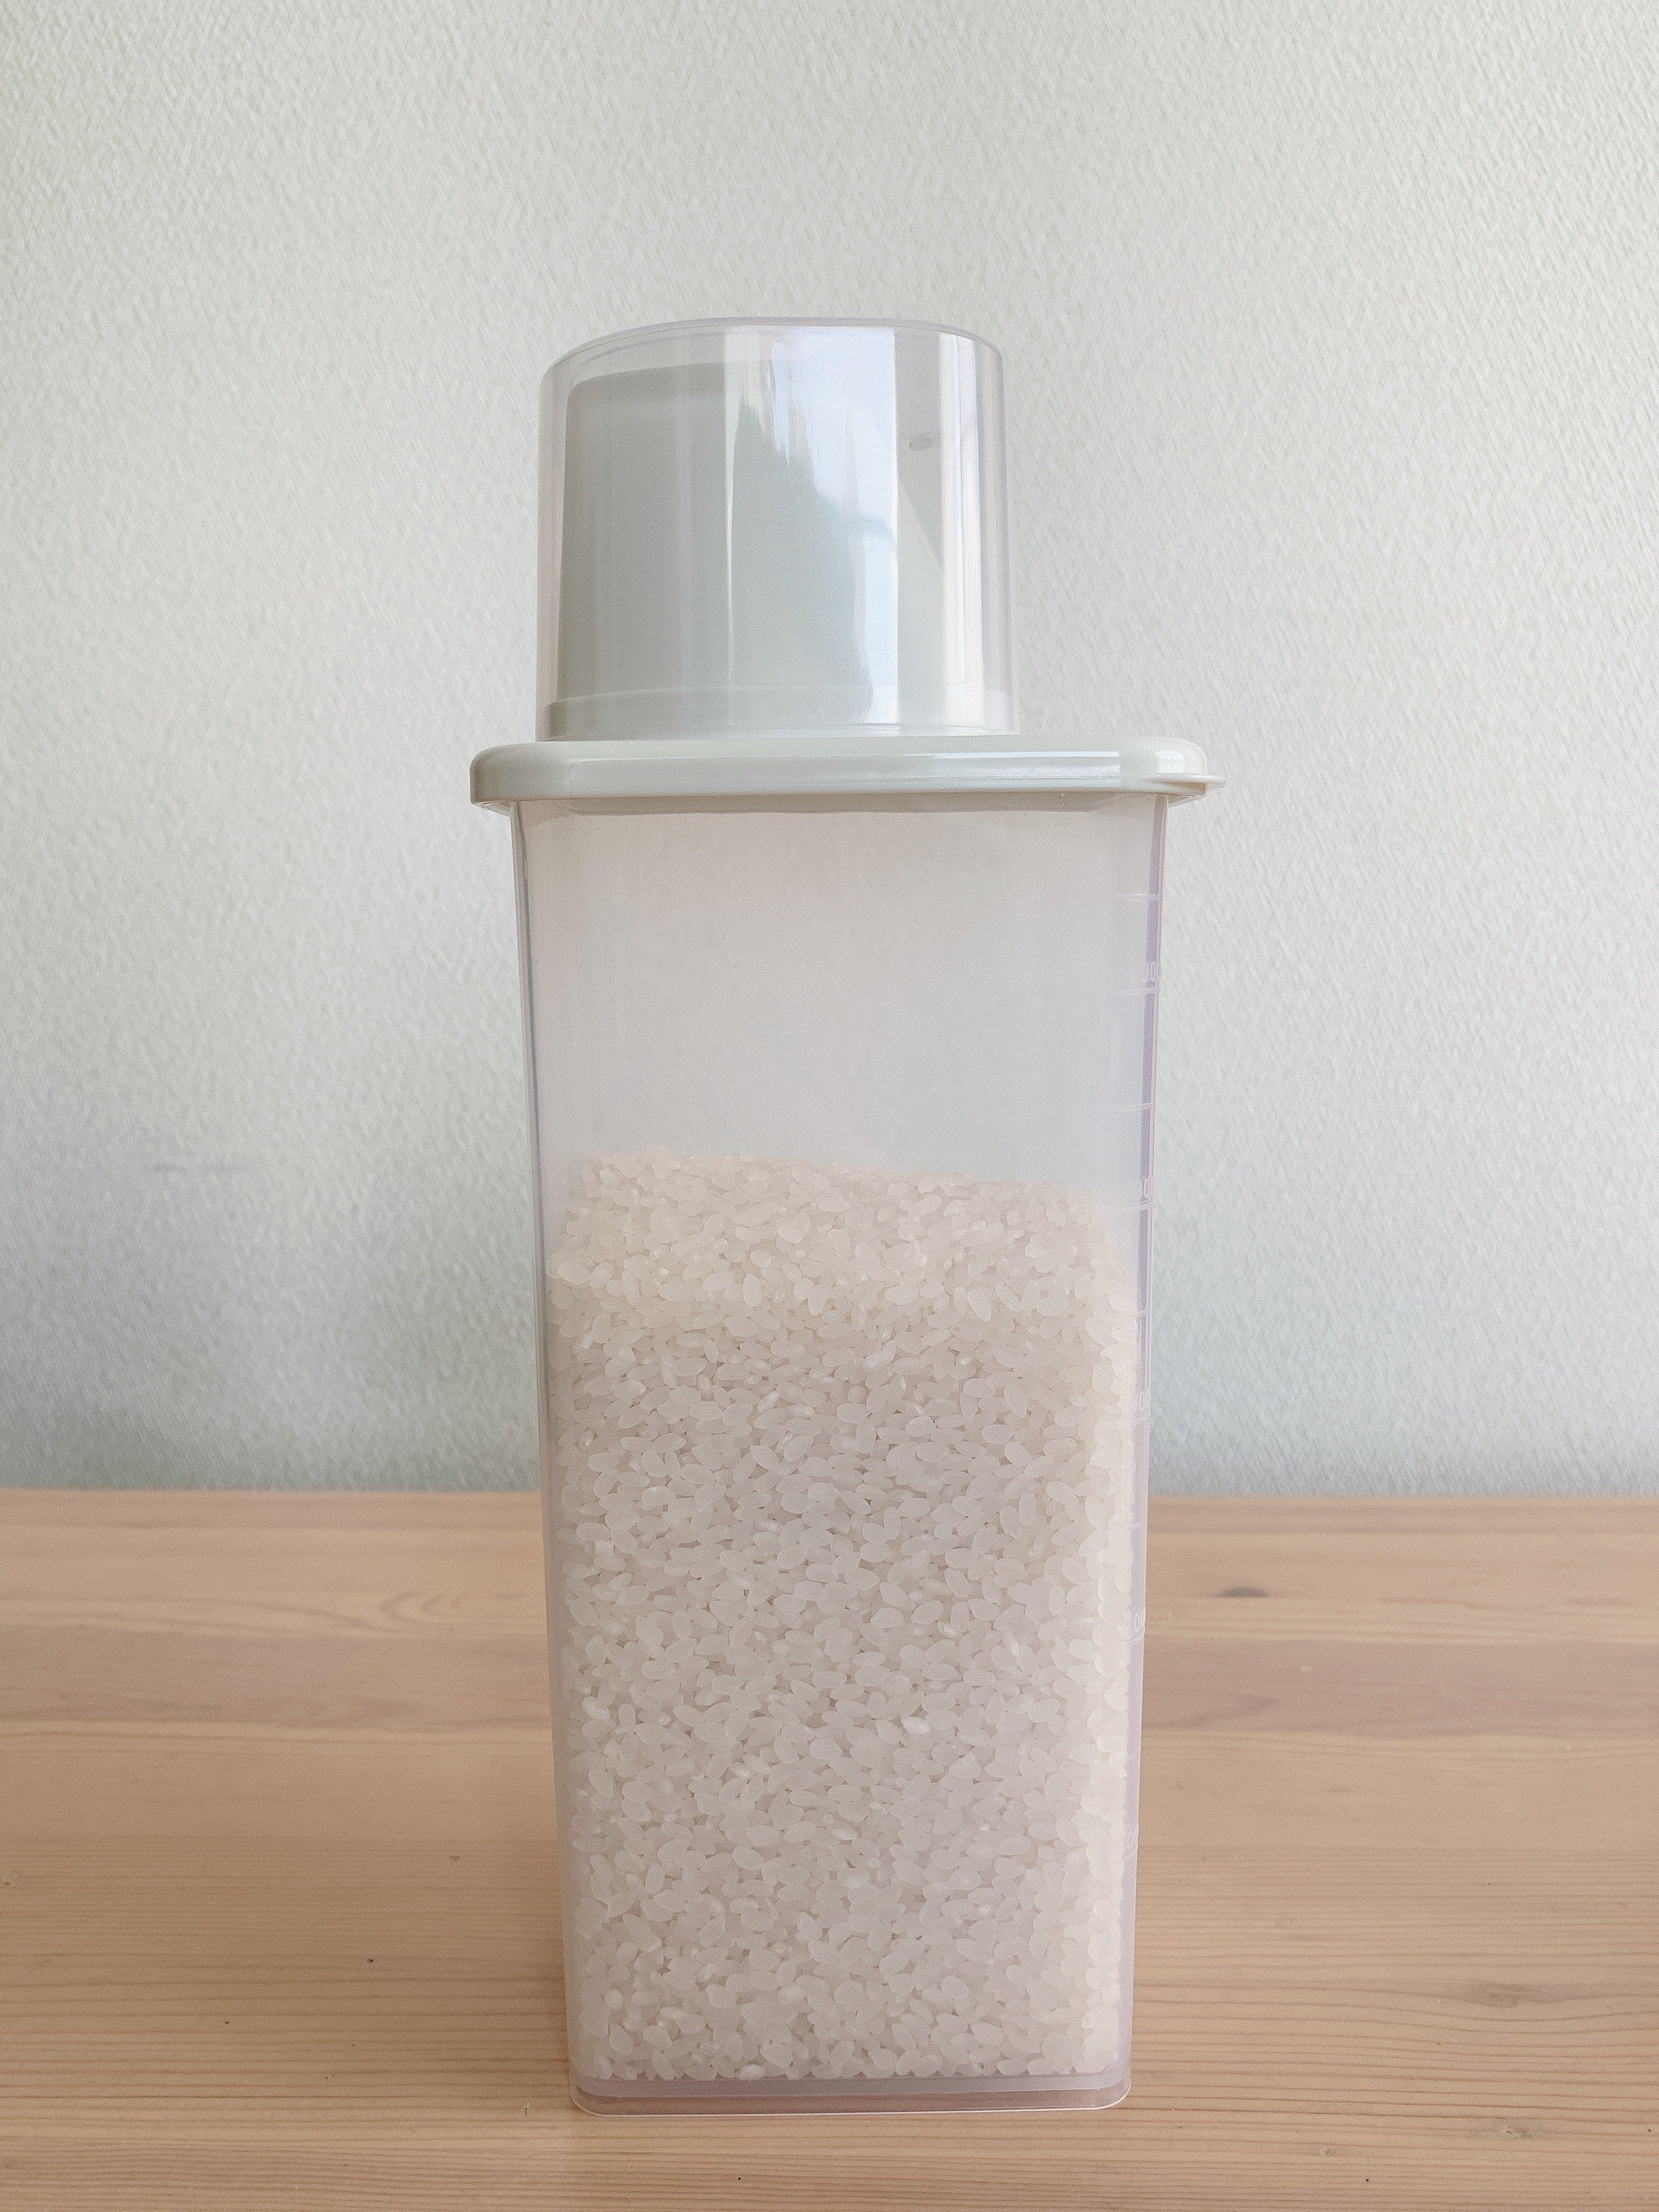 DAISO（ダイソー）のおすすめ便利グッズ「穀物保管容器（1200mL）」約6合分のお米が入る